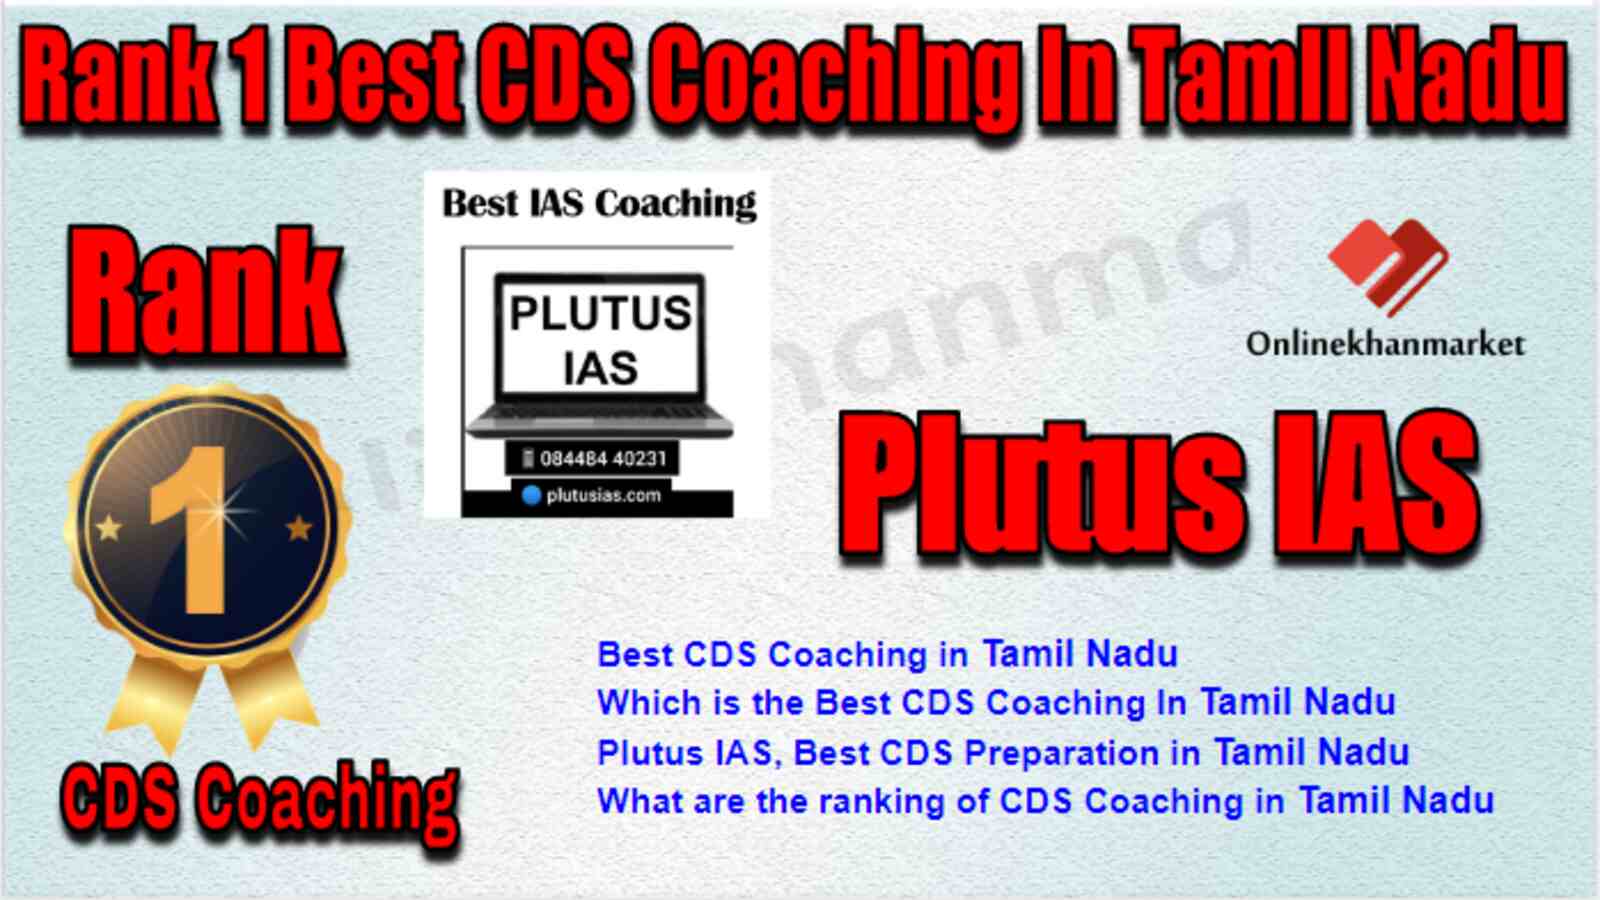 Rank 1 Best CDS Coaching in Tamil Nadu